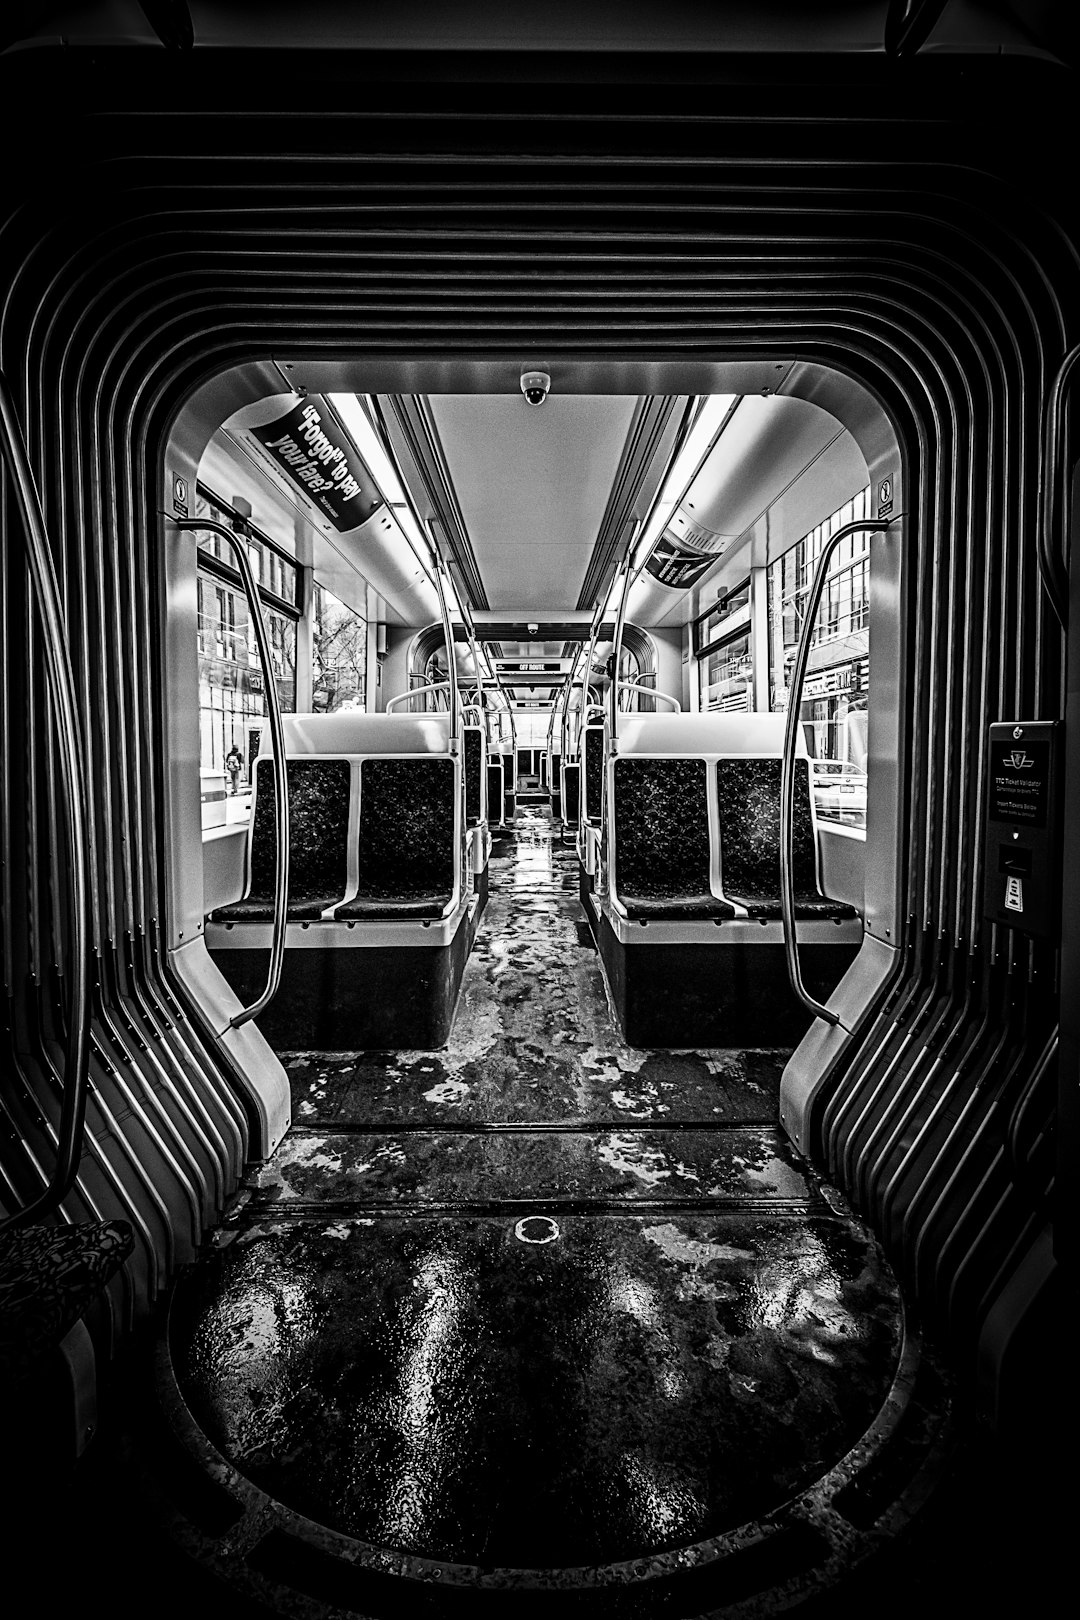 grayscale photo of train seats